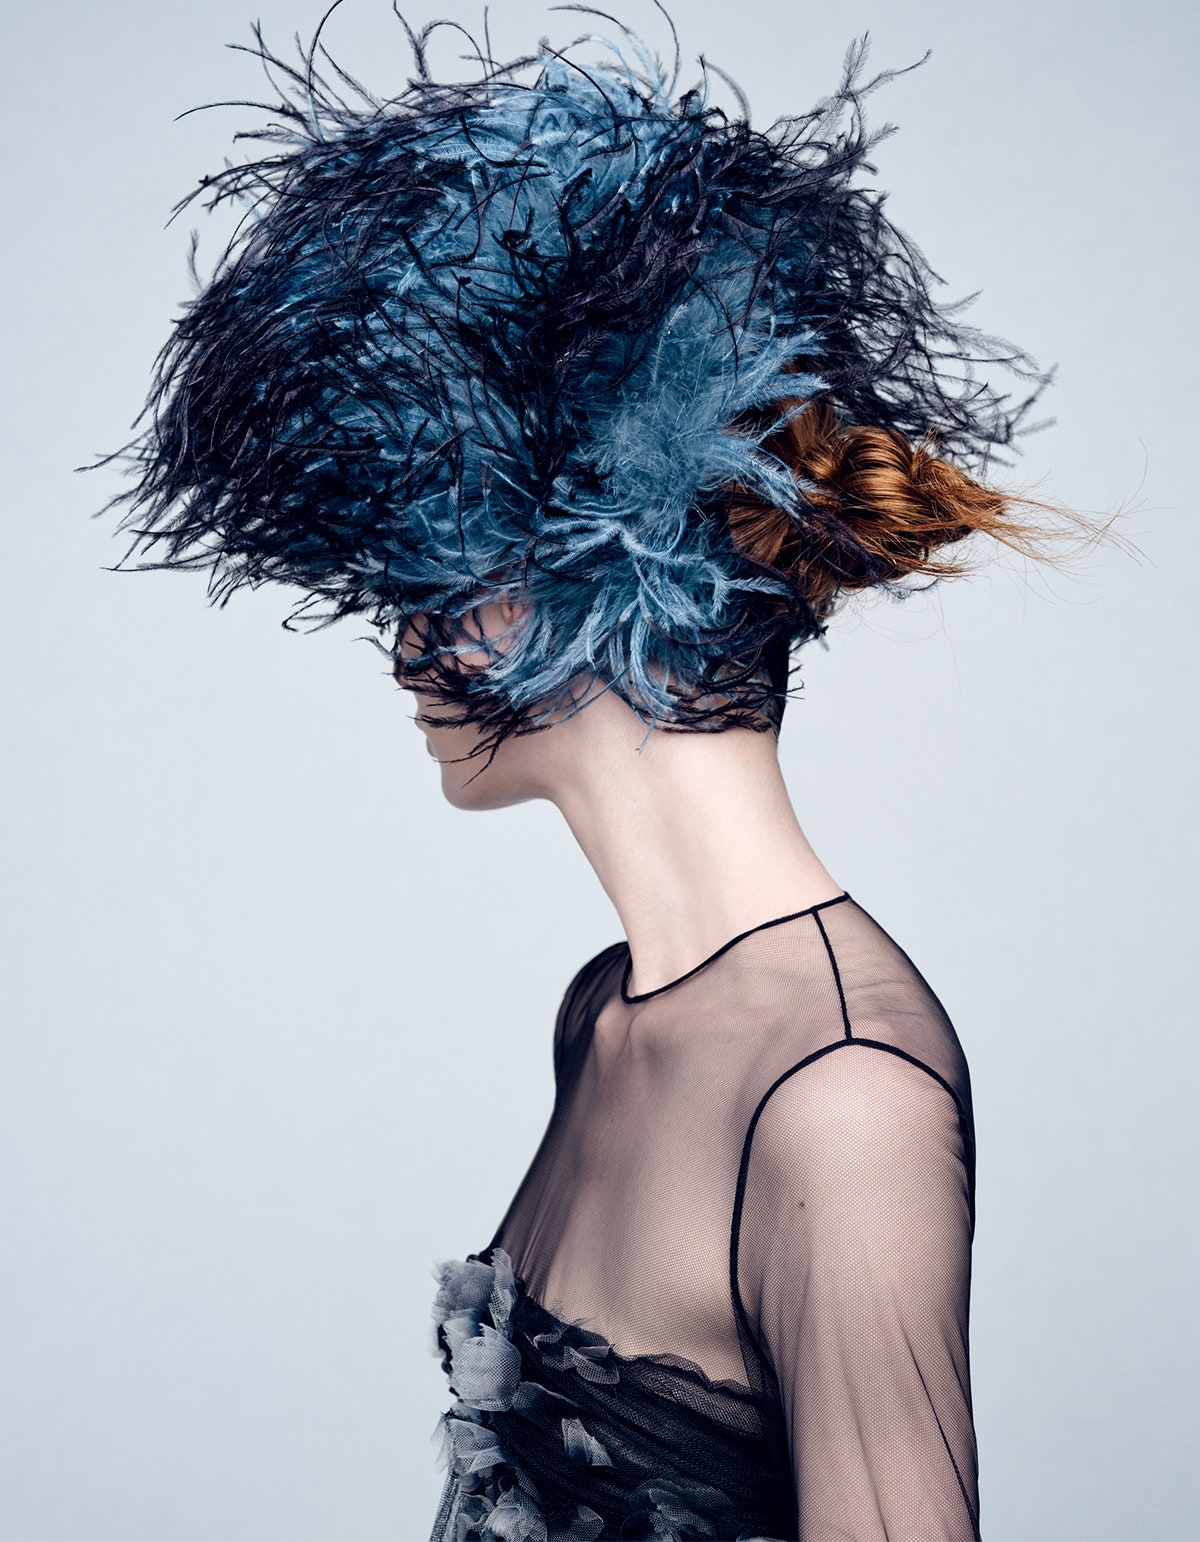 Alyda Grace by Nathaniel Goldberg for Vogue Japan January 2022